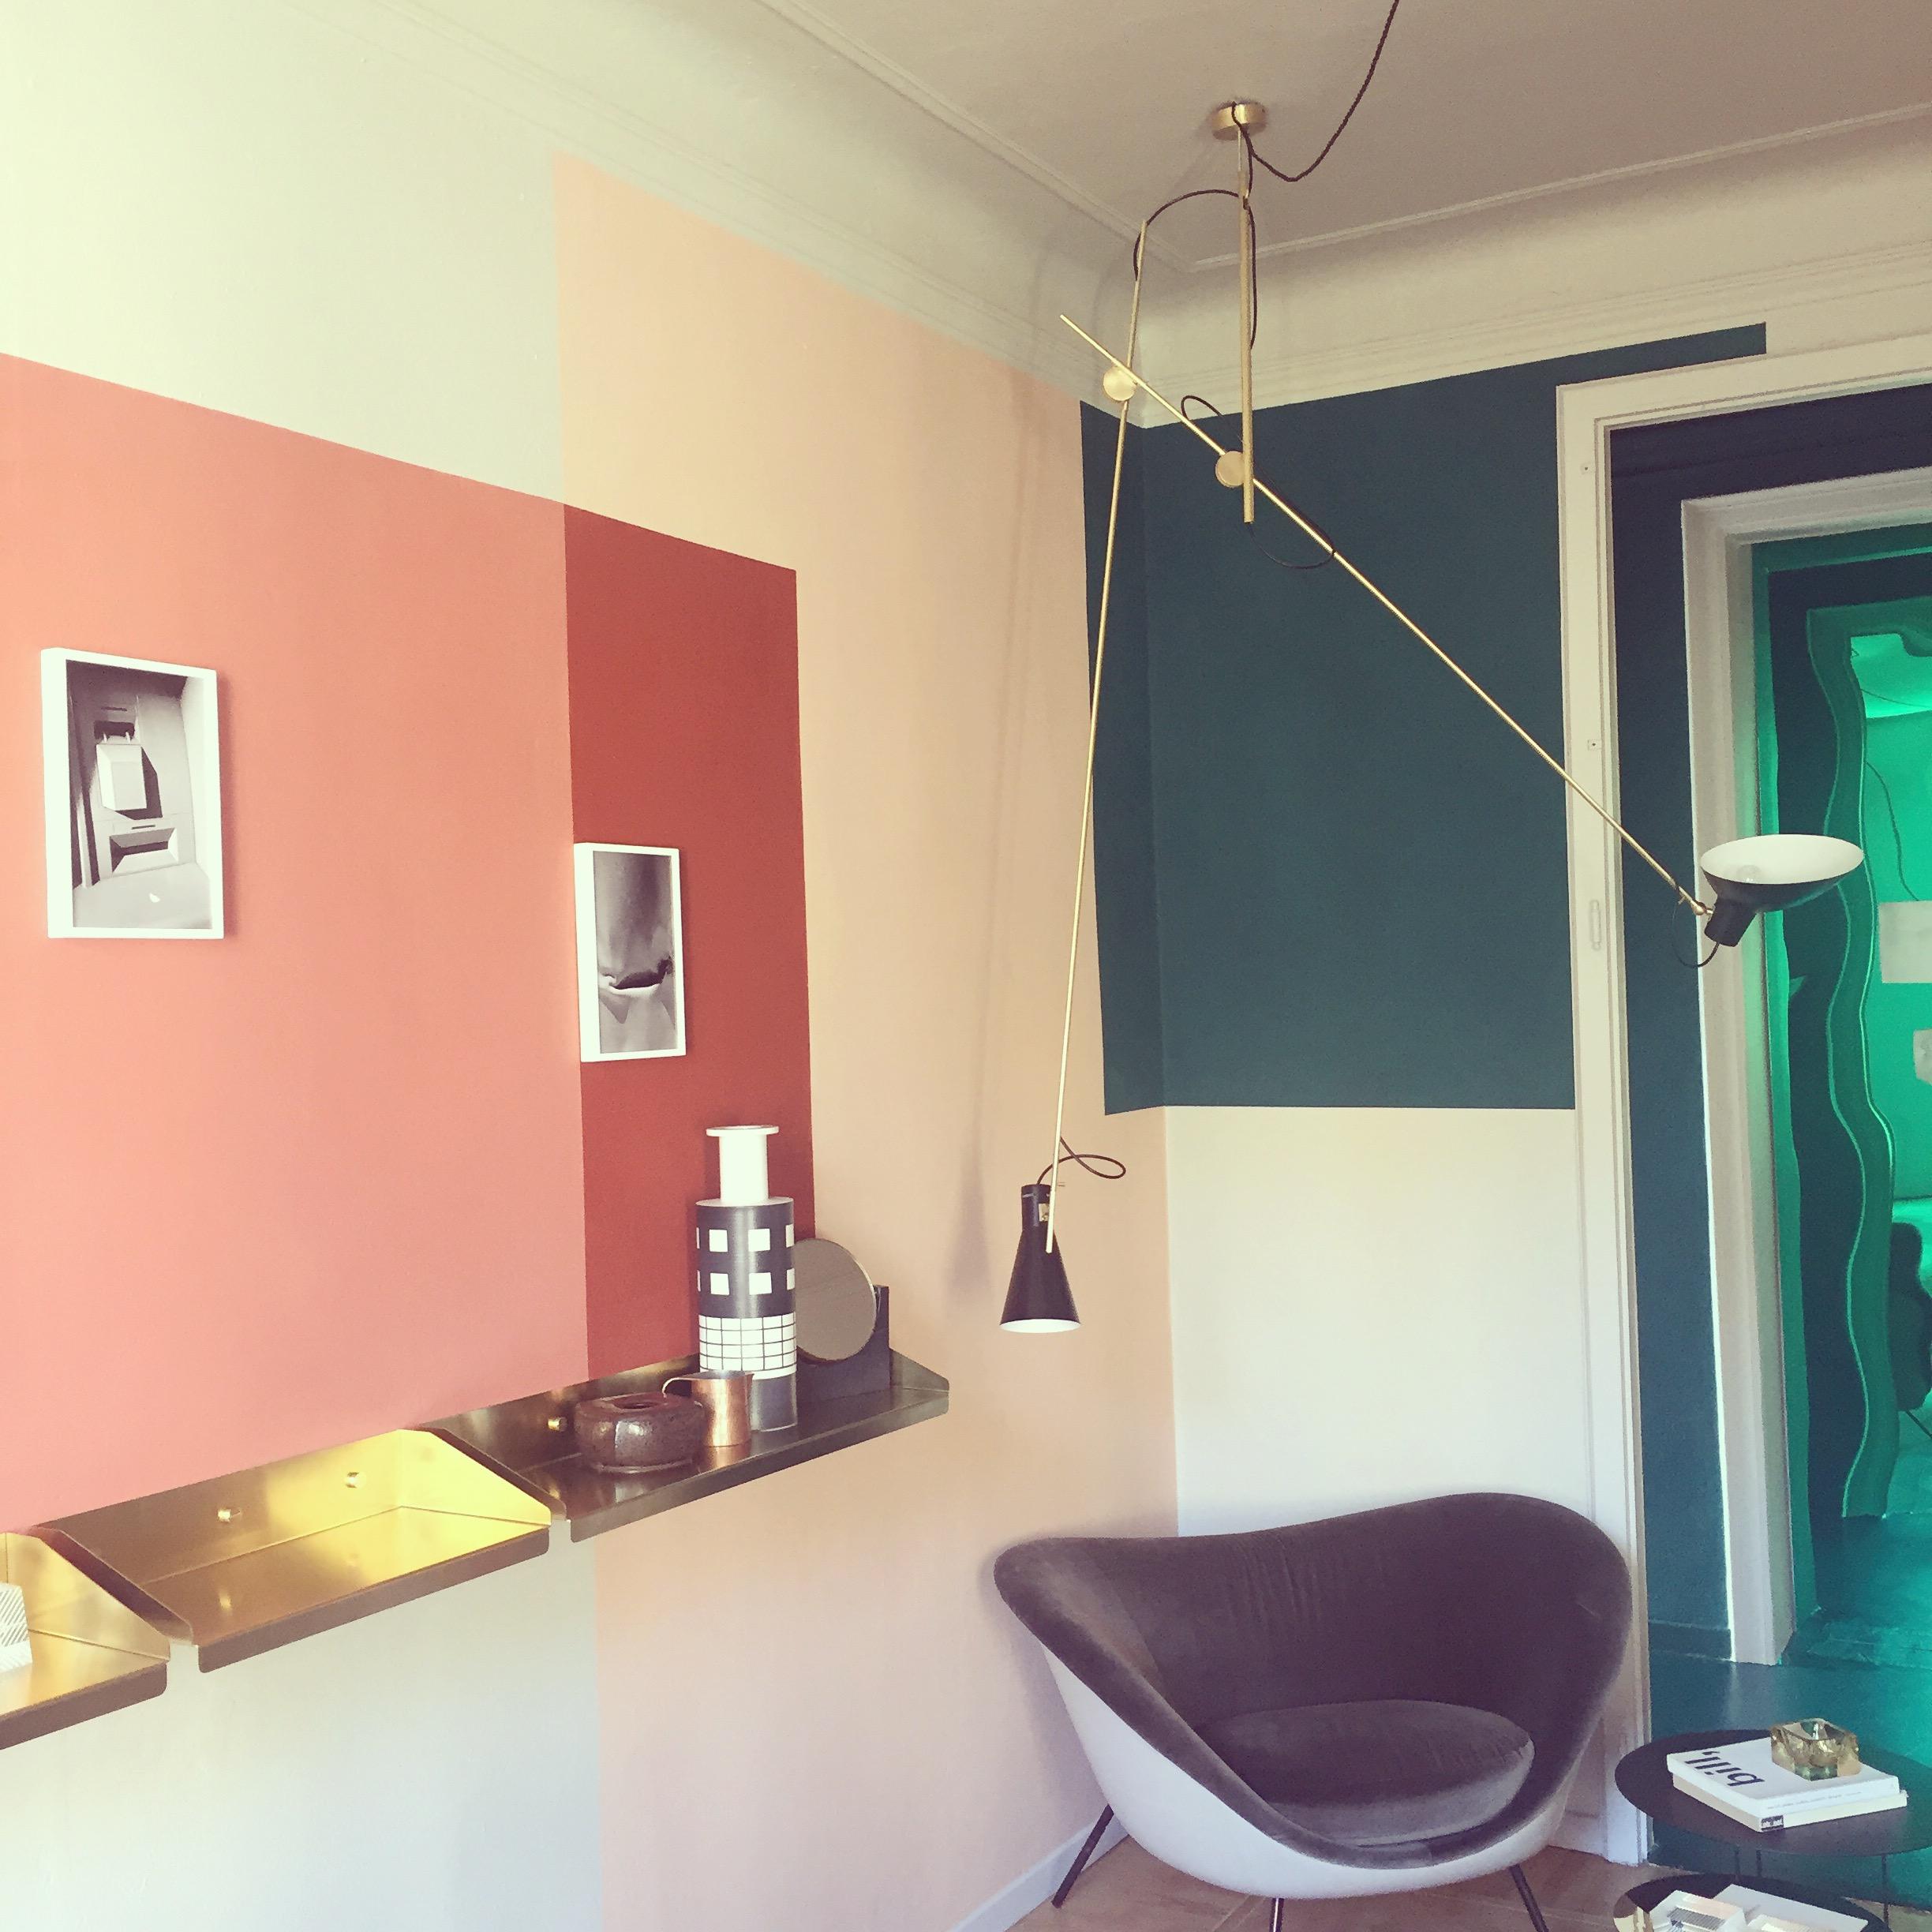 #wandfarbe #farbkombi #pastellfarbenewandfarbe #wandgrafik #interiordesign #mailand